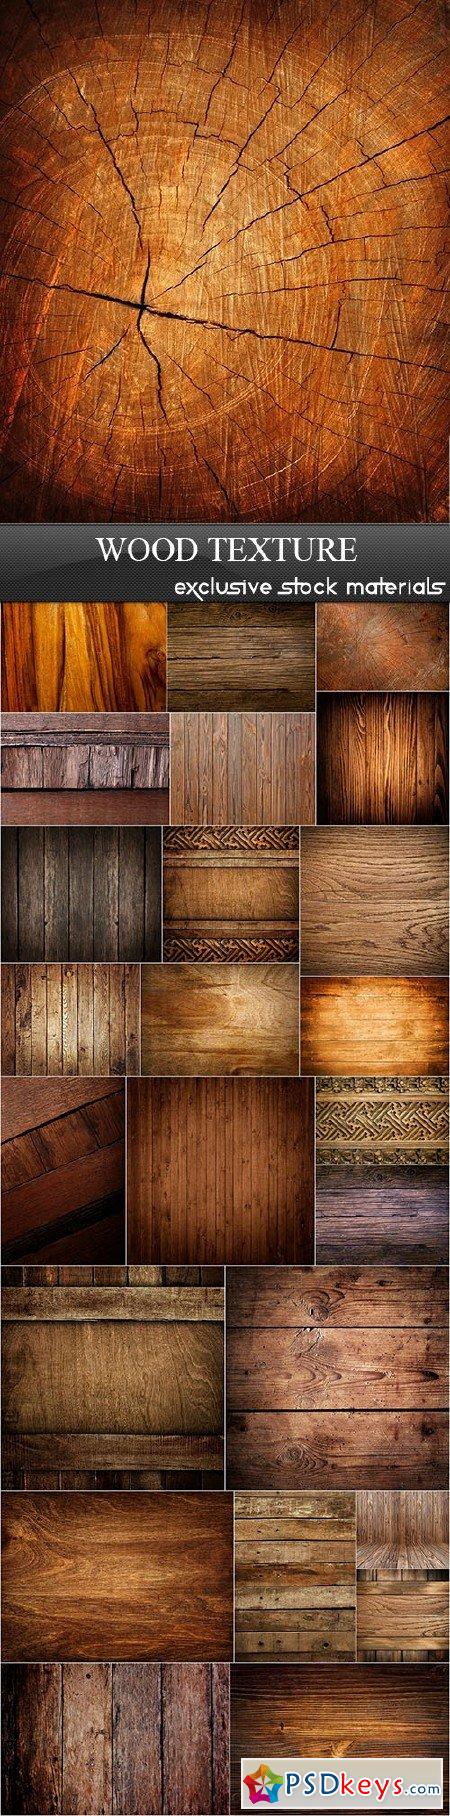 Wood Texture 25xUHQ JPEG